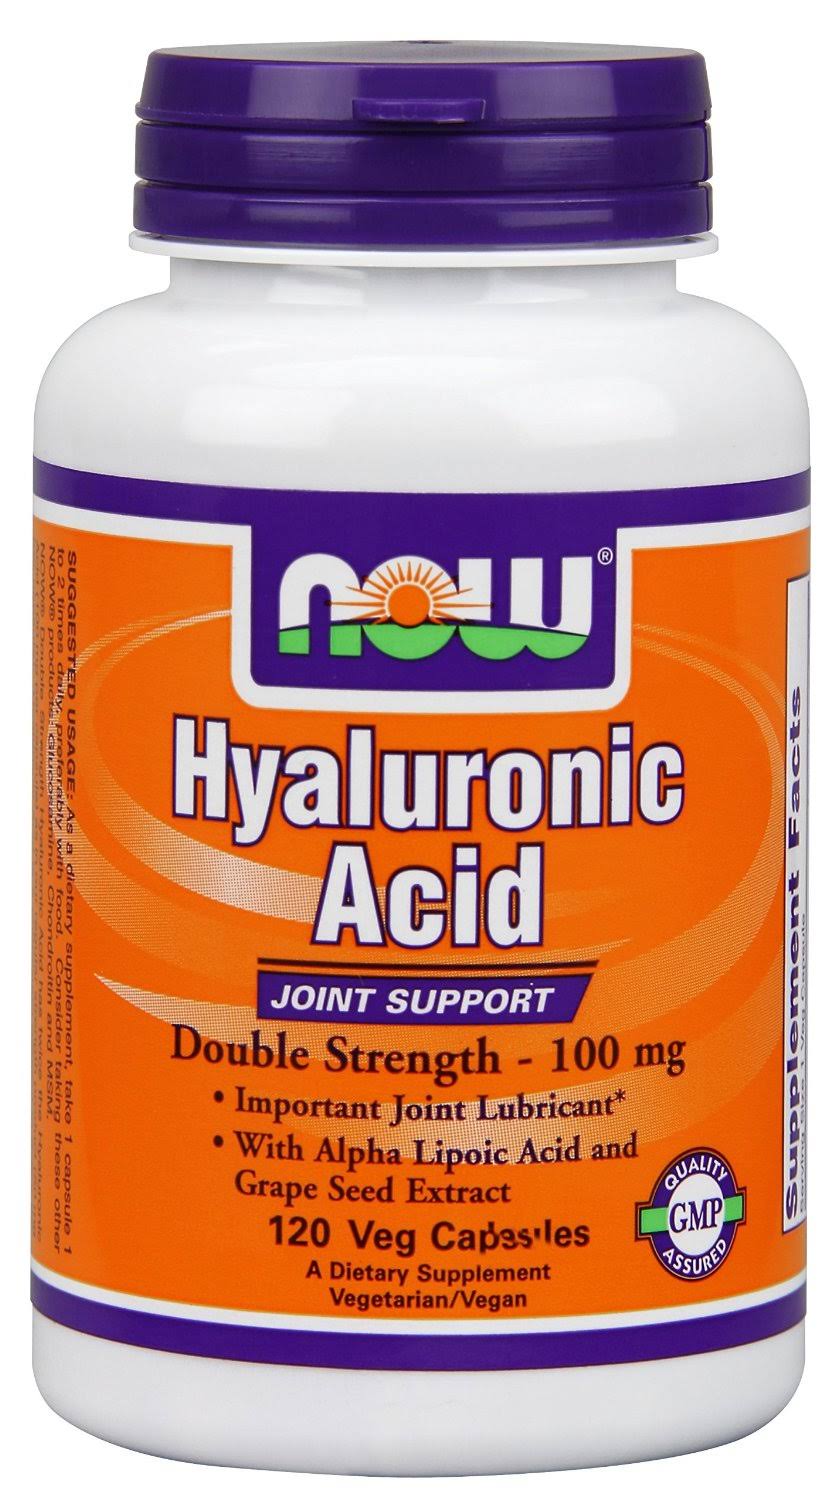 Now Foods Hyaluronic Acid Supplement - 120 Veg Capsules, 100mg